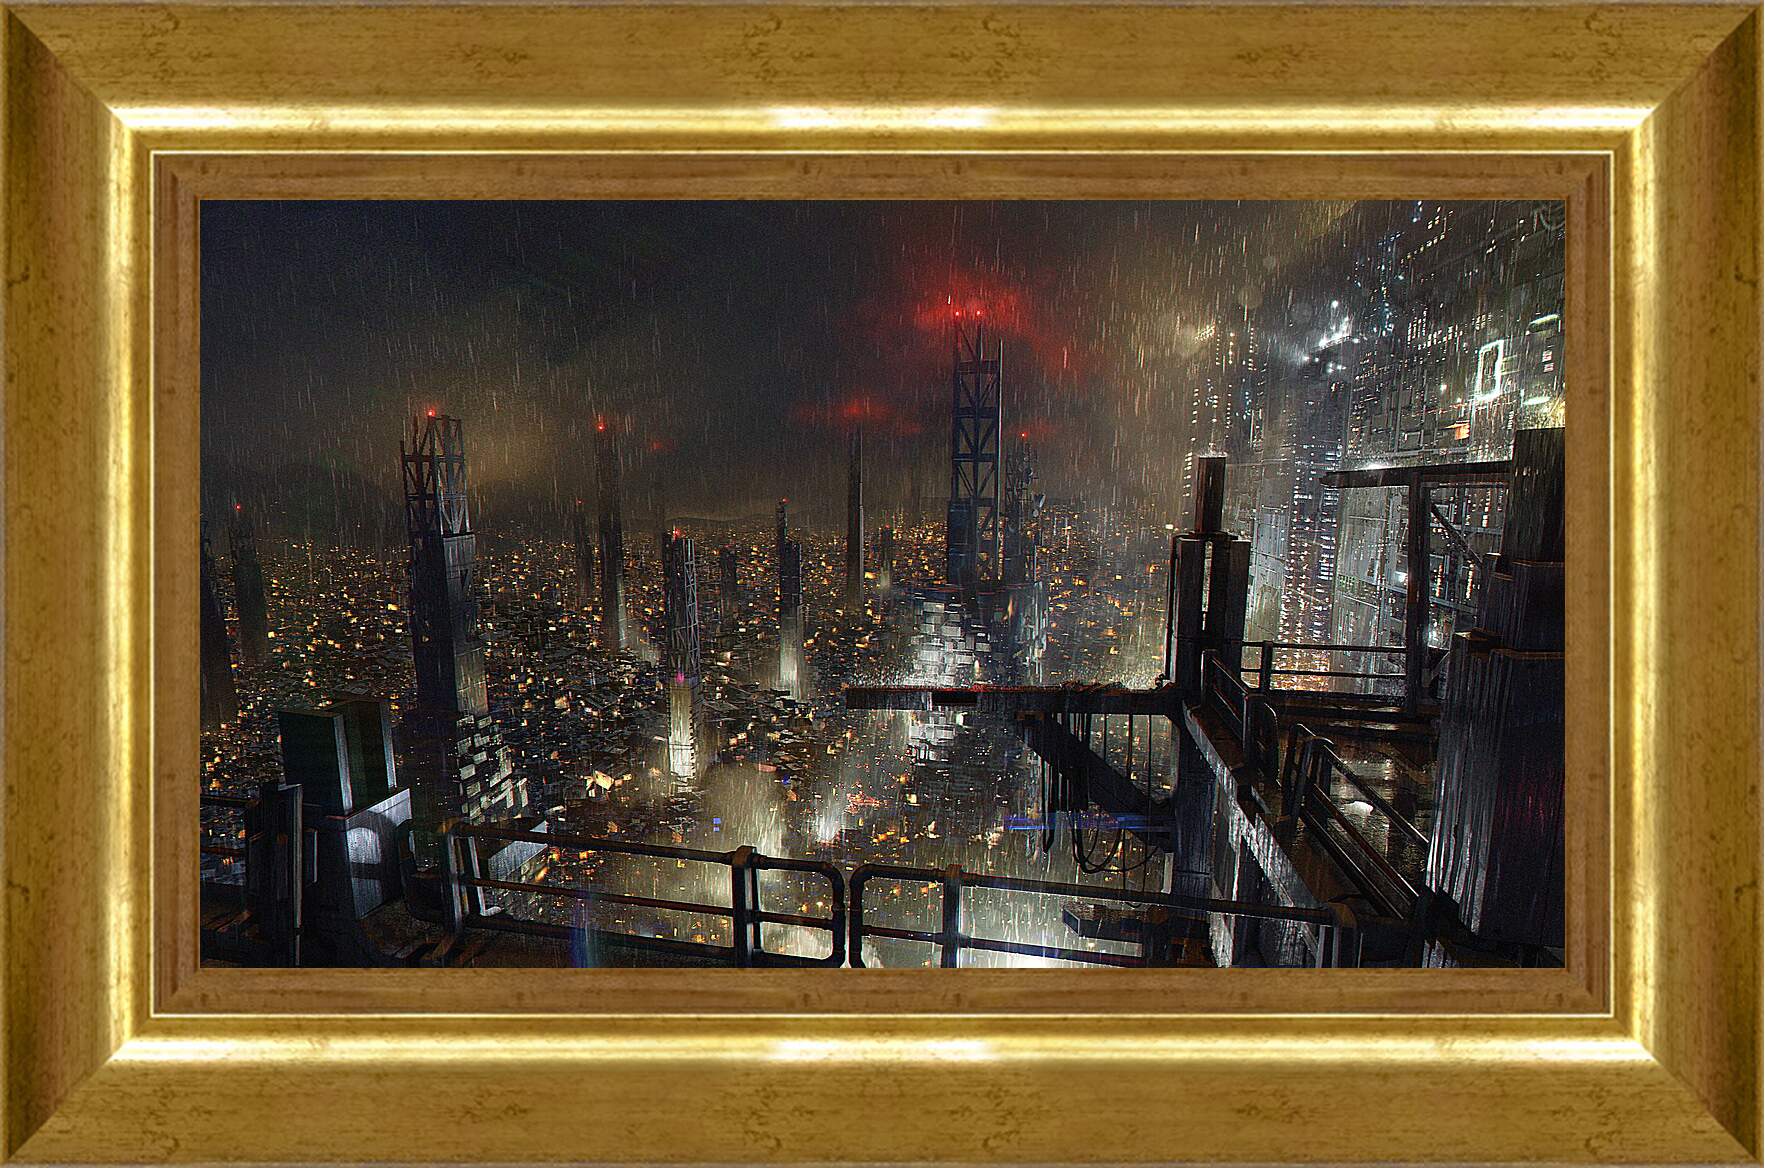 Картина в раме - Deus Ex: Mankind Divided
